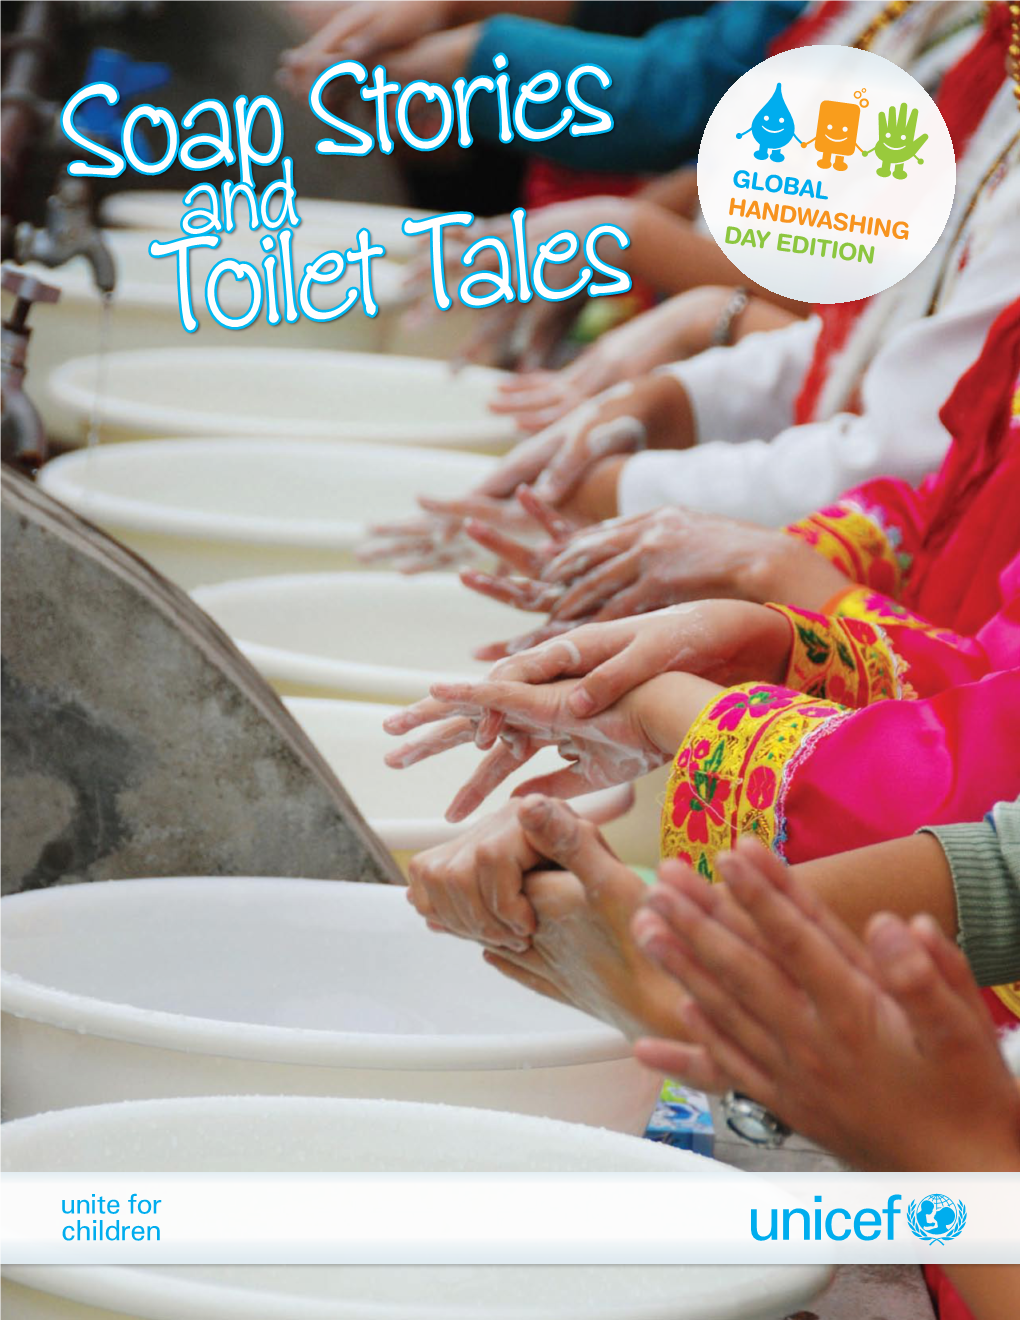 Global Handwashing Day Edition